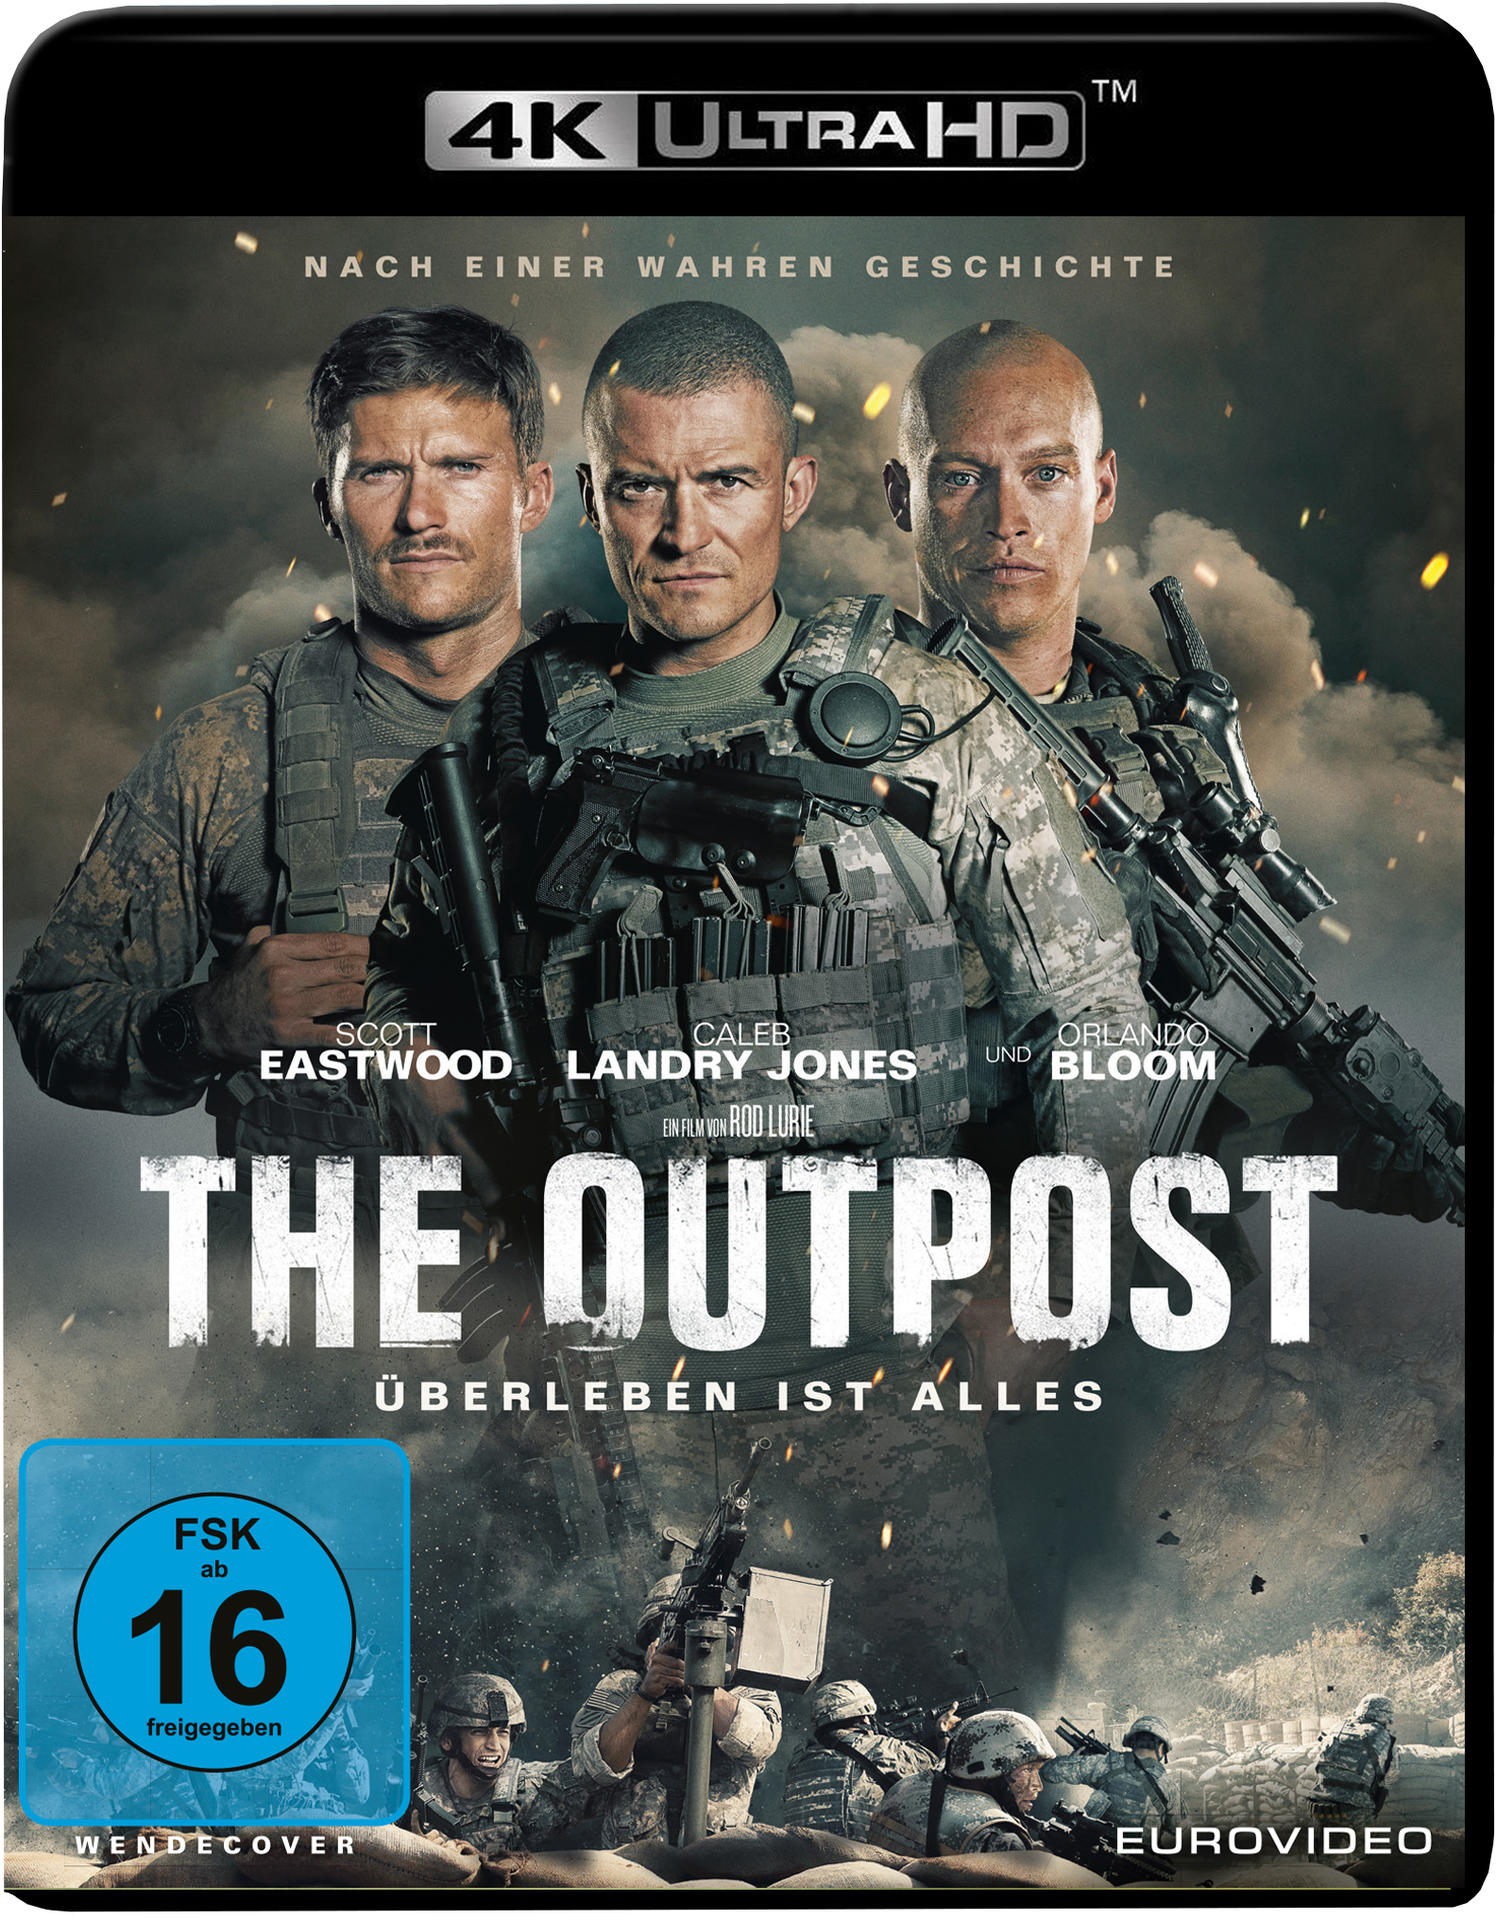 The Outpost - Überleben ist Ultra alles HD Blu-ray 4K